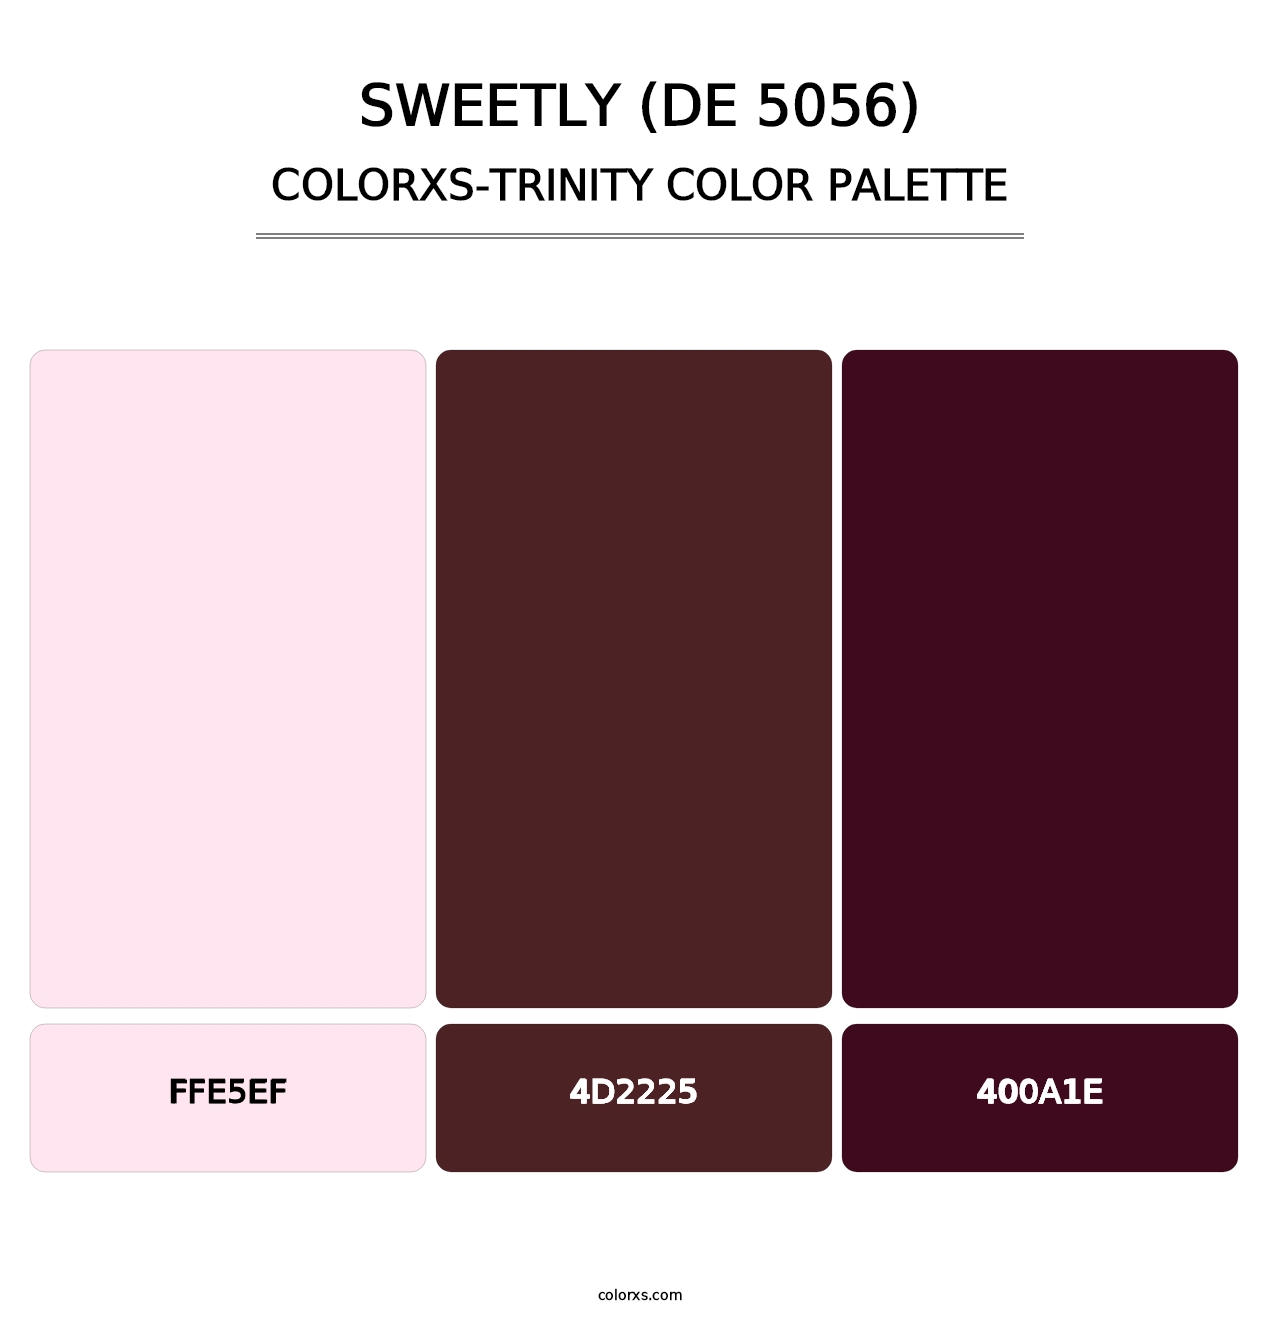 Sweetly (DE 5056) - Colorxs Trinity Palette